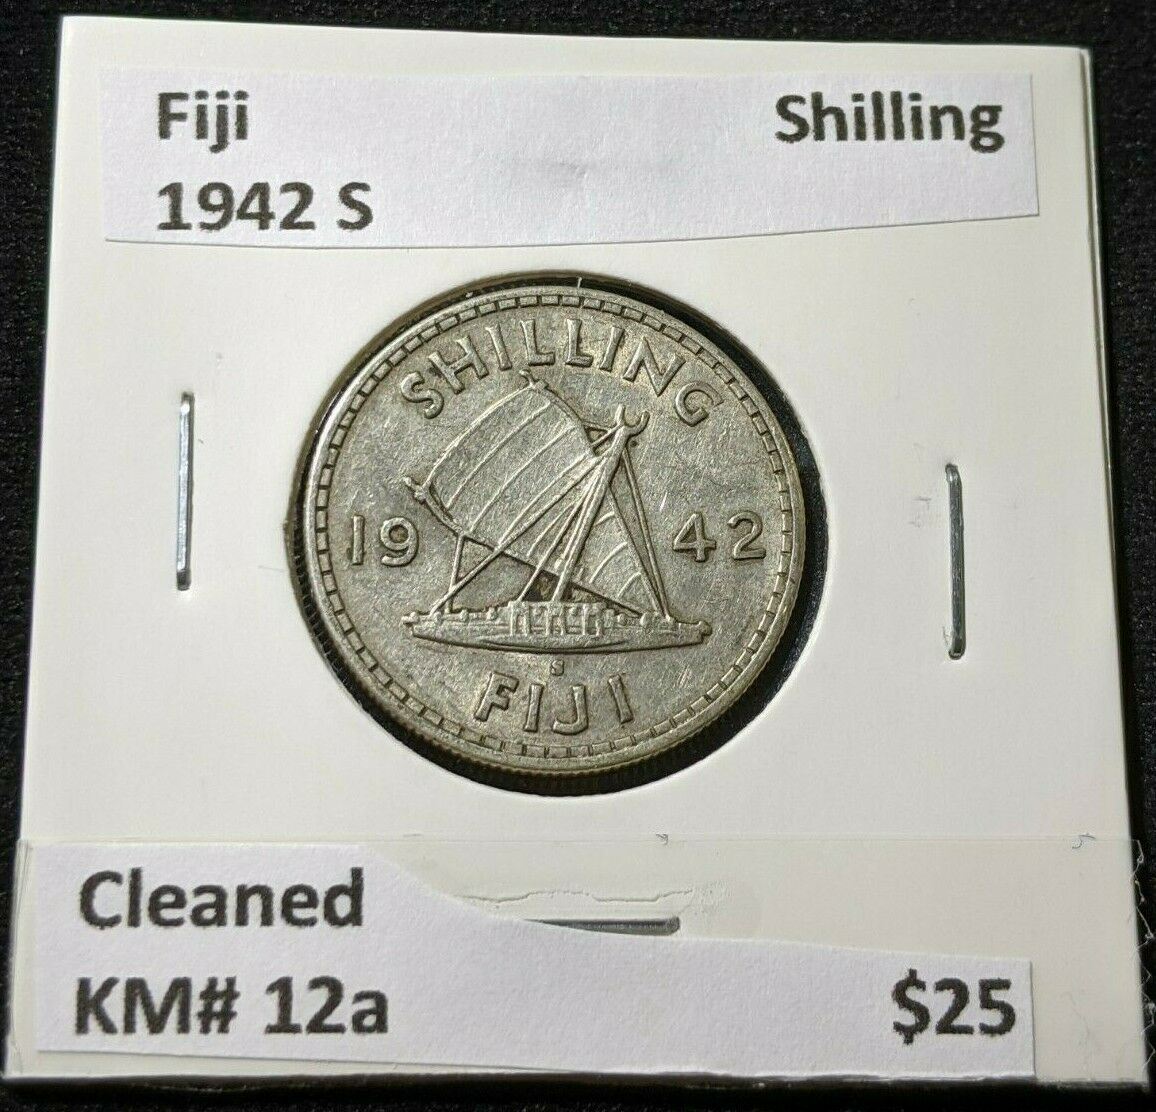 Fiji 1942 S Shilling KM# 12a Cleaned #525